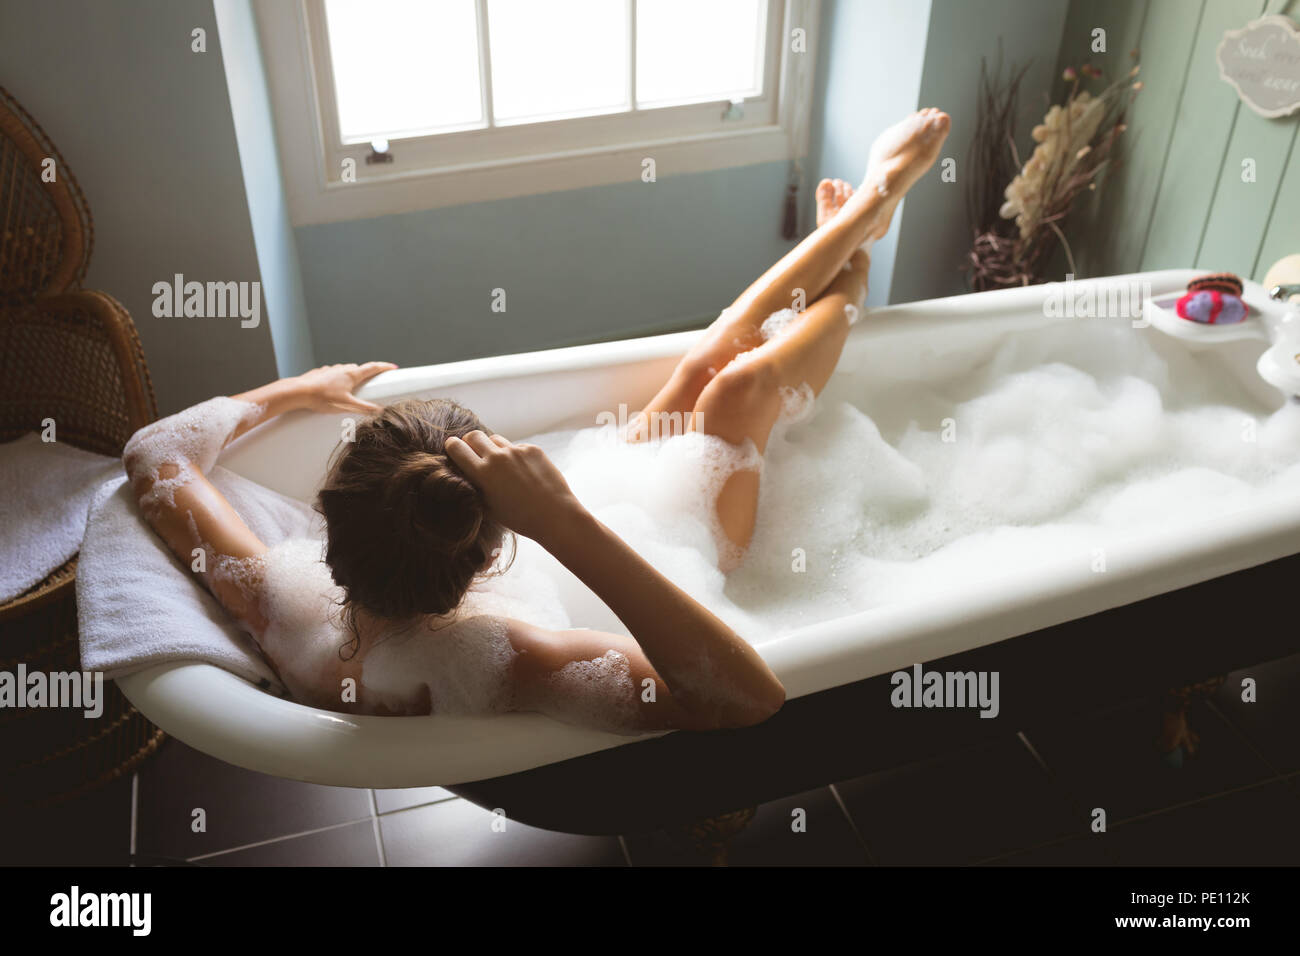 https://c8.alamy.com/comp/PE112K/woman-taking-a-bath-in-bath-tub-PE112K.jpg